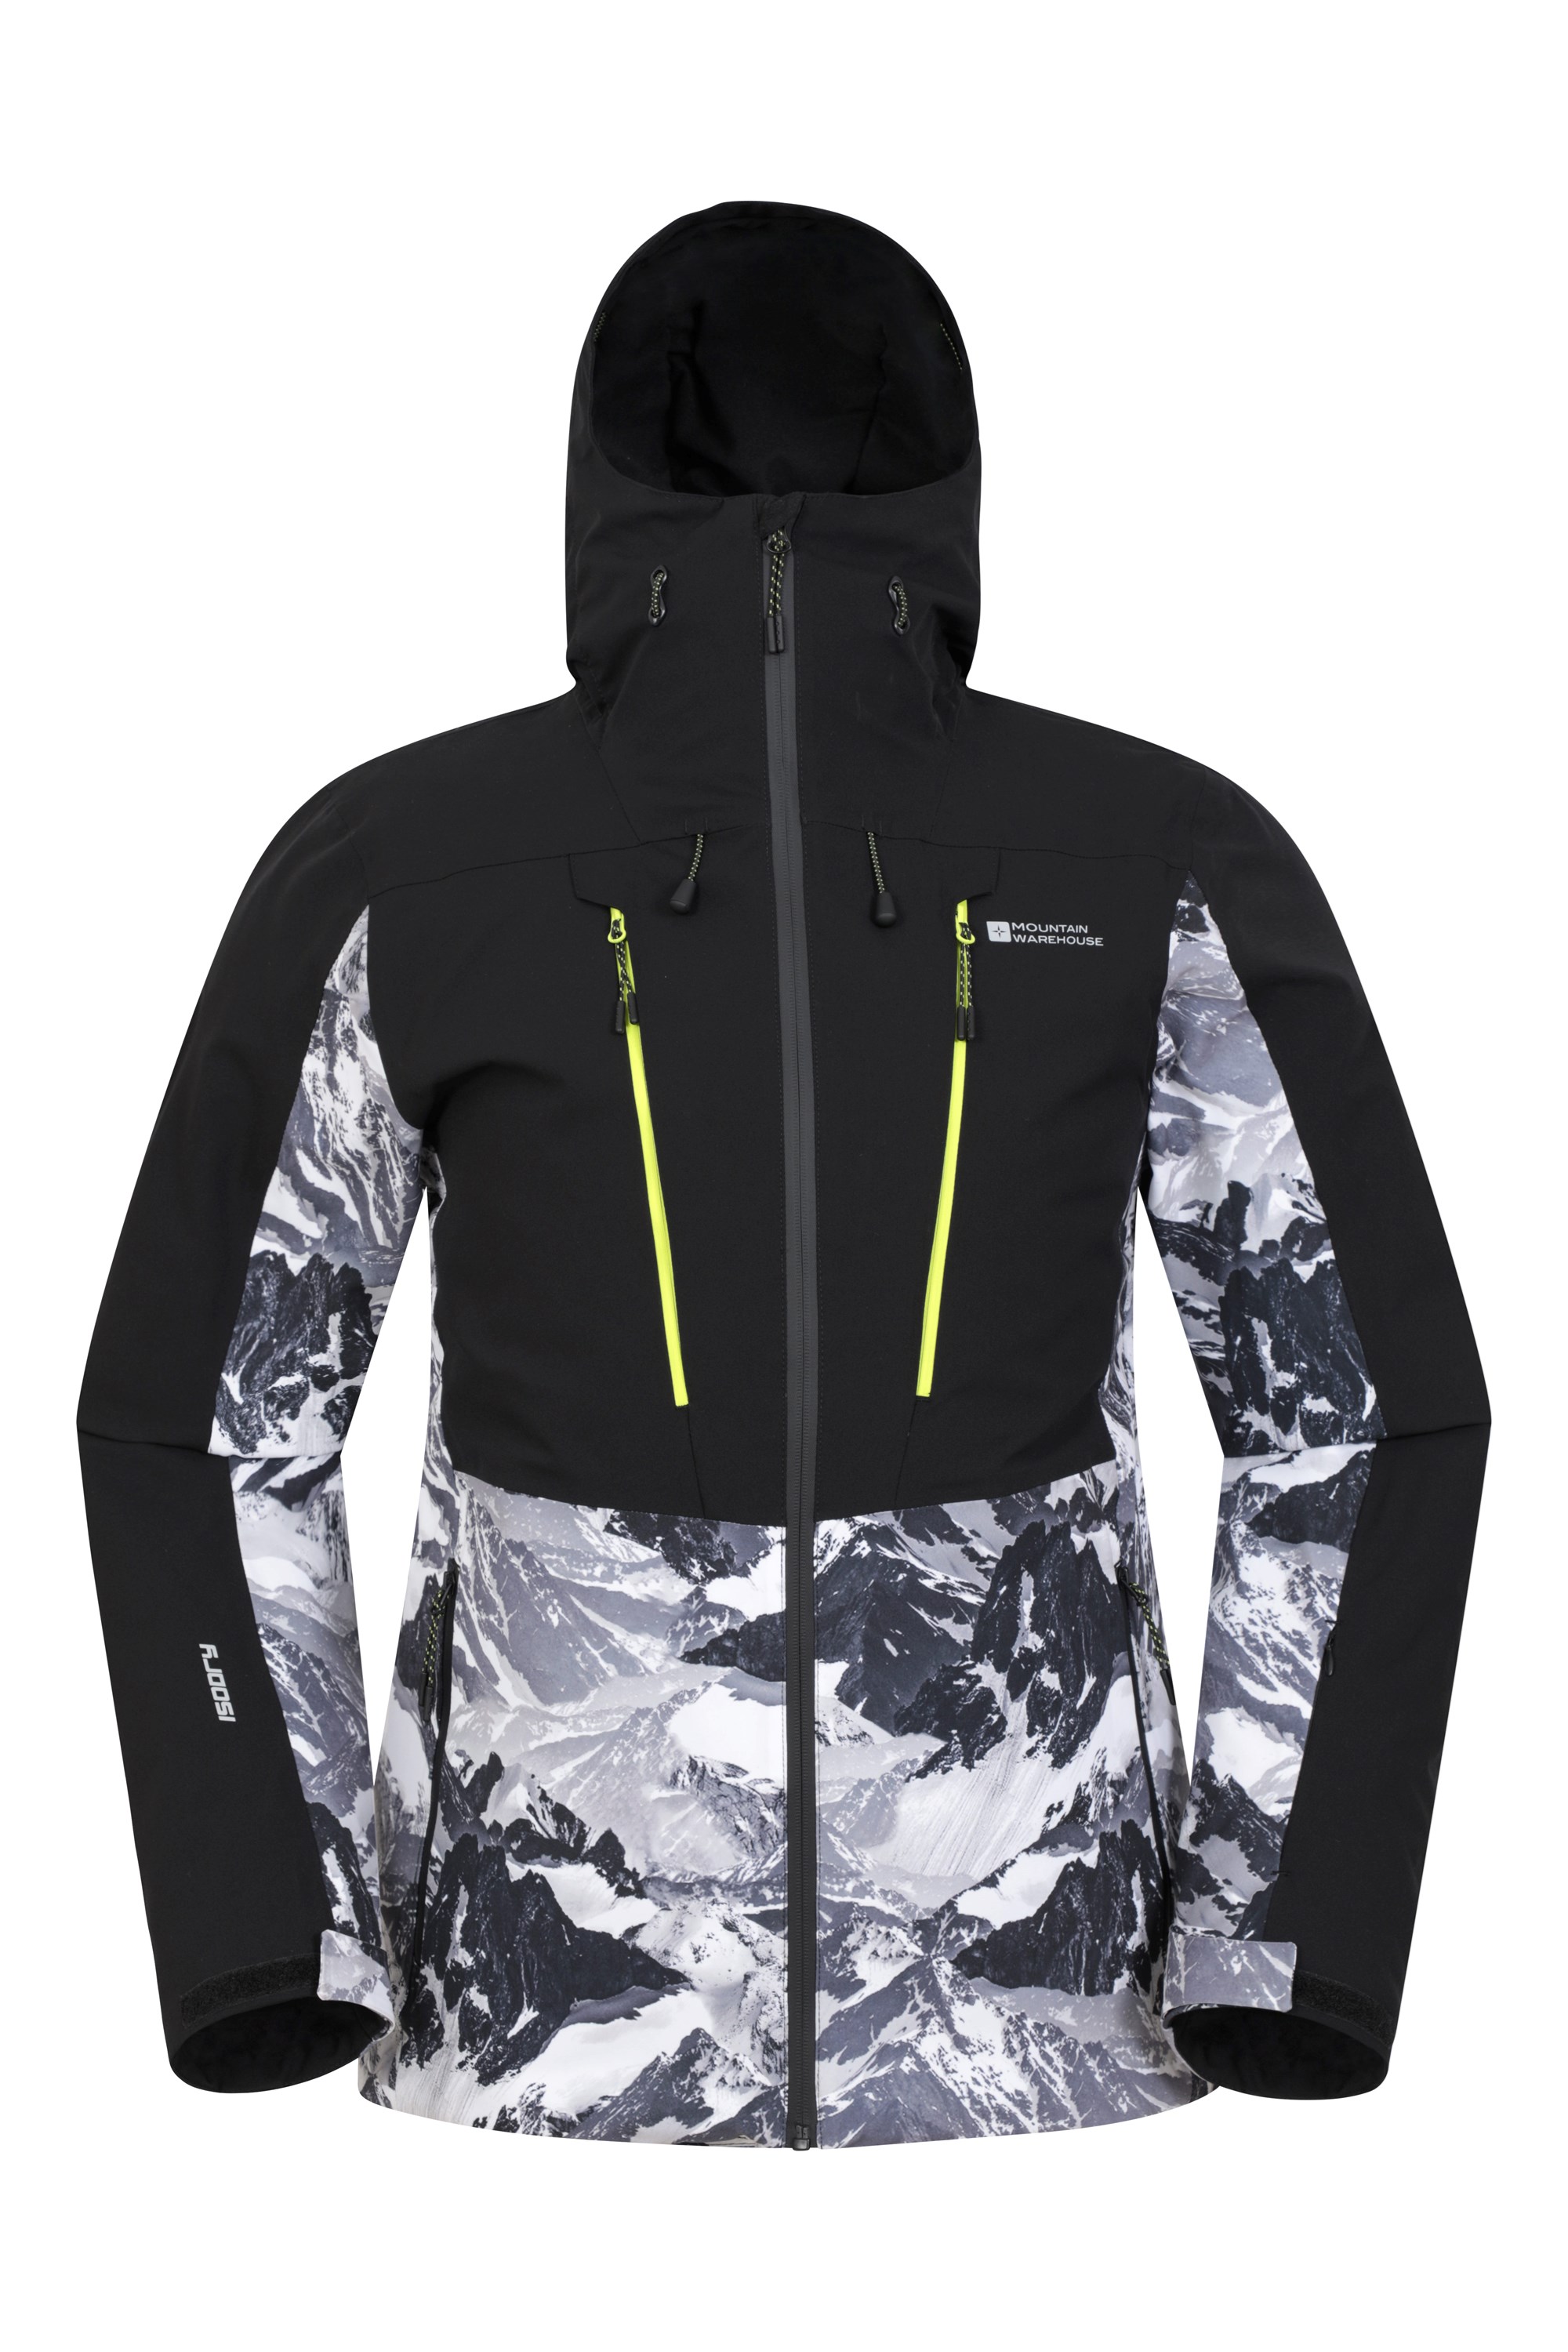 Infinite Extreme Mens Ski Jacket - Black